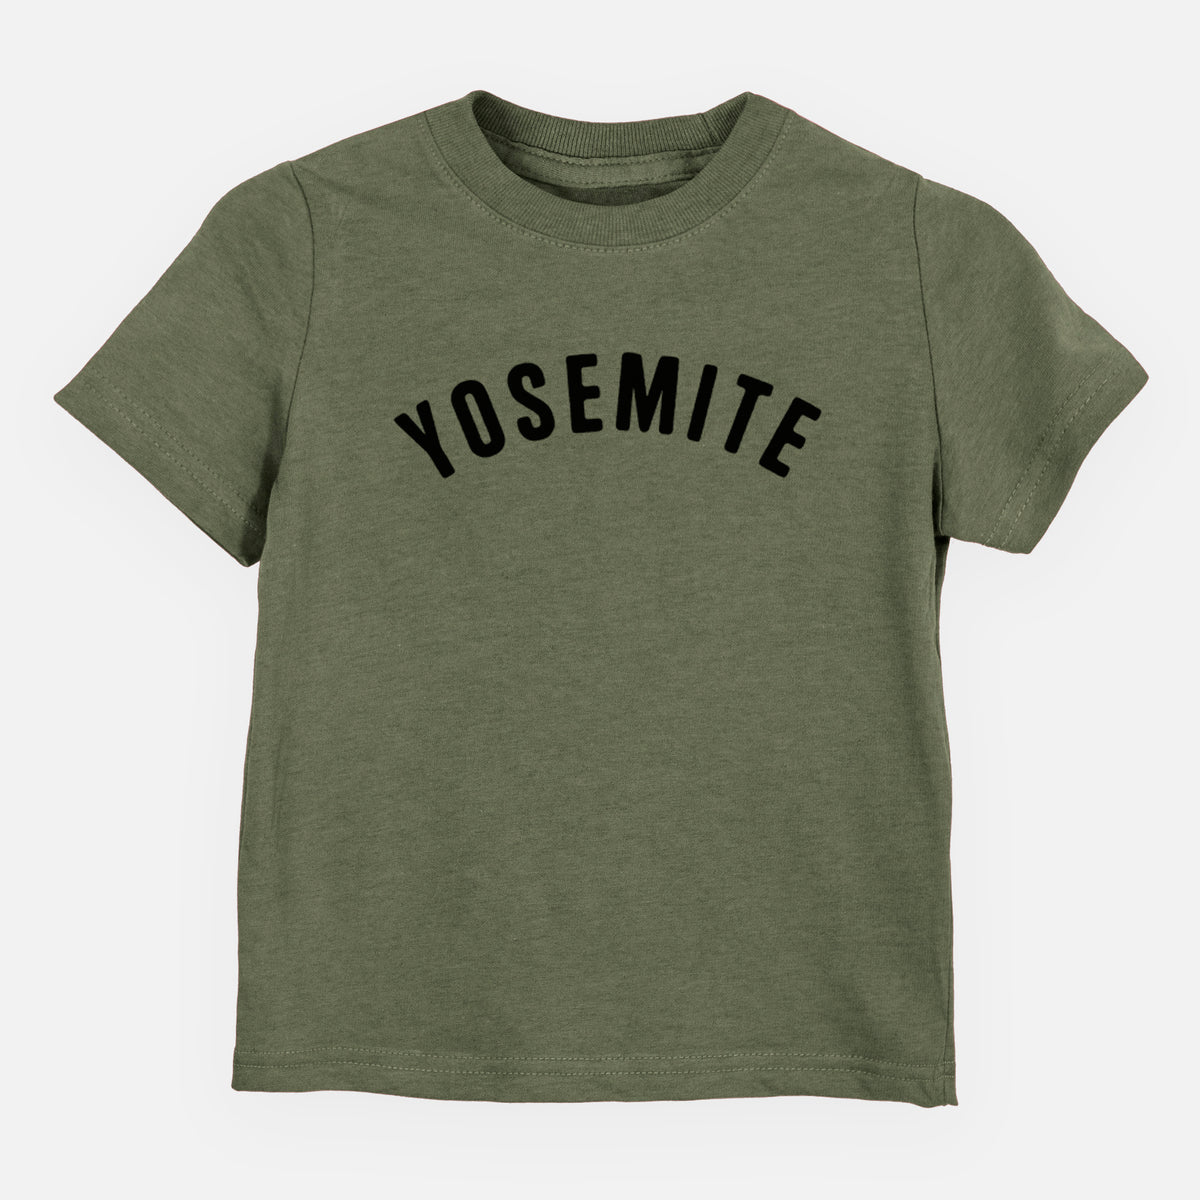 Yosemite - Kids Shirt